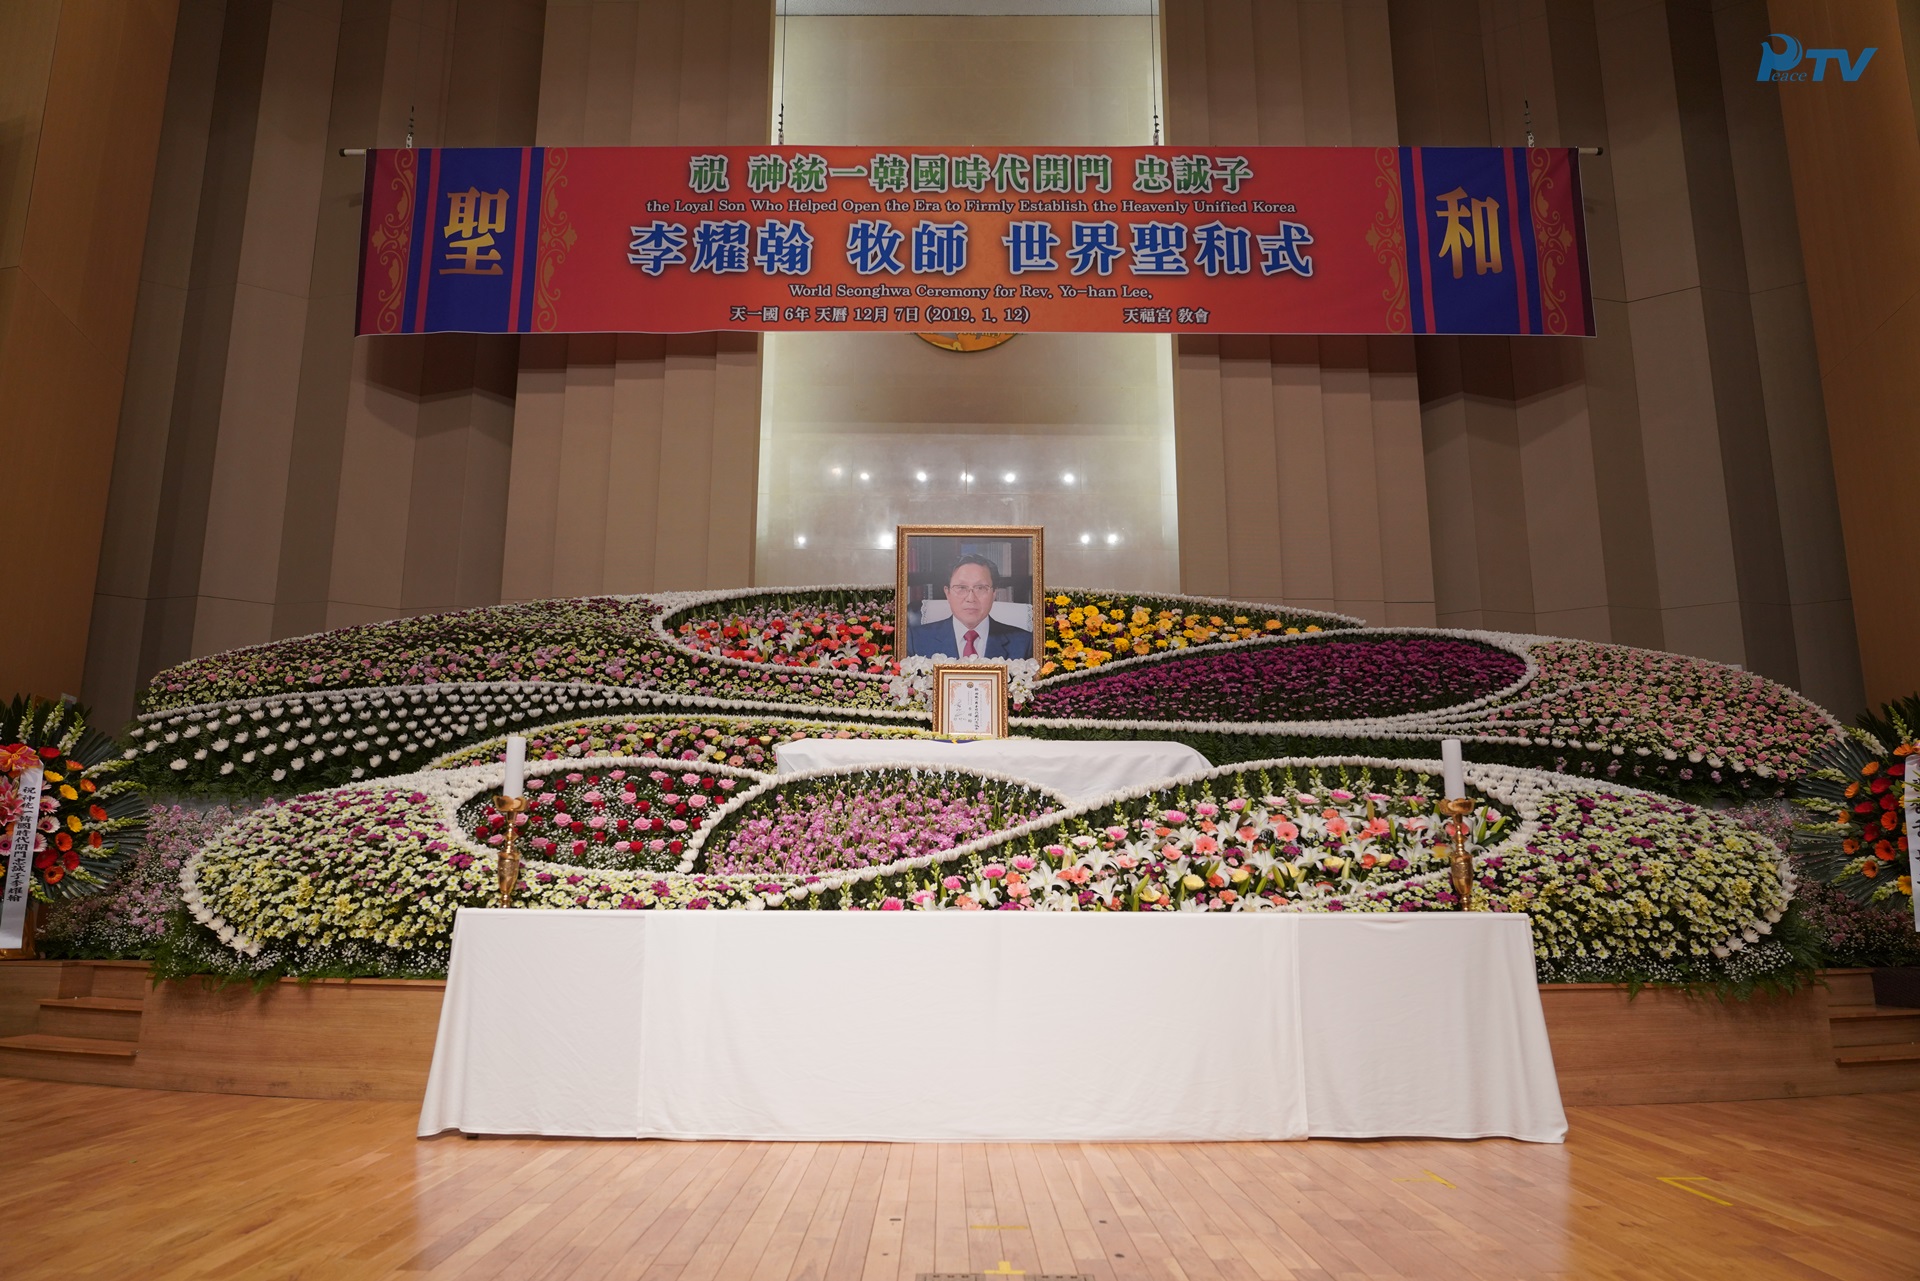 World Seonghwa Ceremony for Rev. Yo-han Lee, The Loyal Son who Helped Open the Era to Firmly Establish the Heavenly Unified Korea (January 12, 2019) Cheon Bok Gung Church